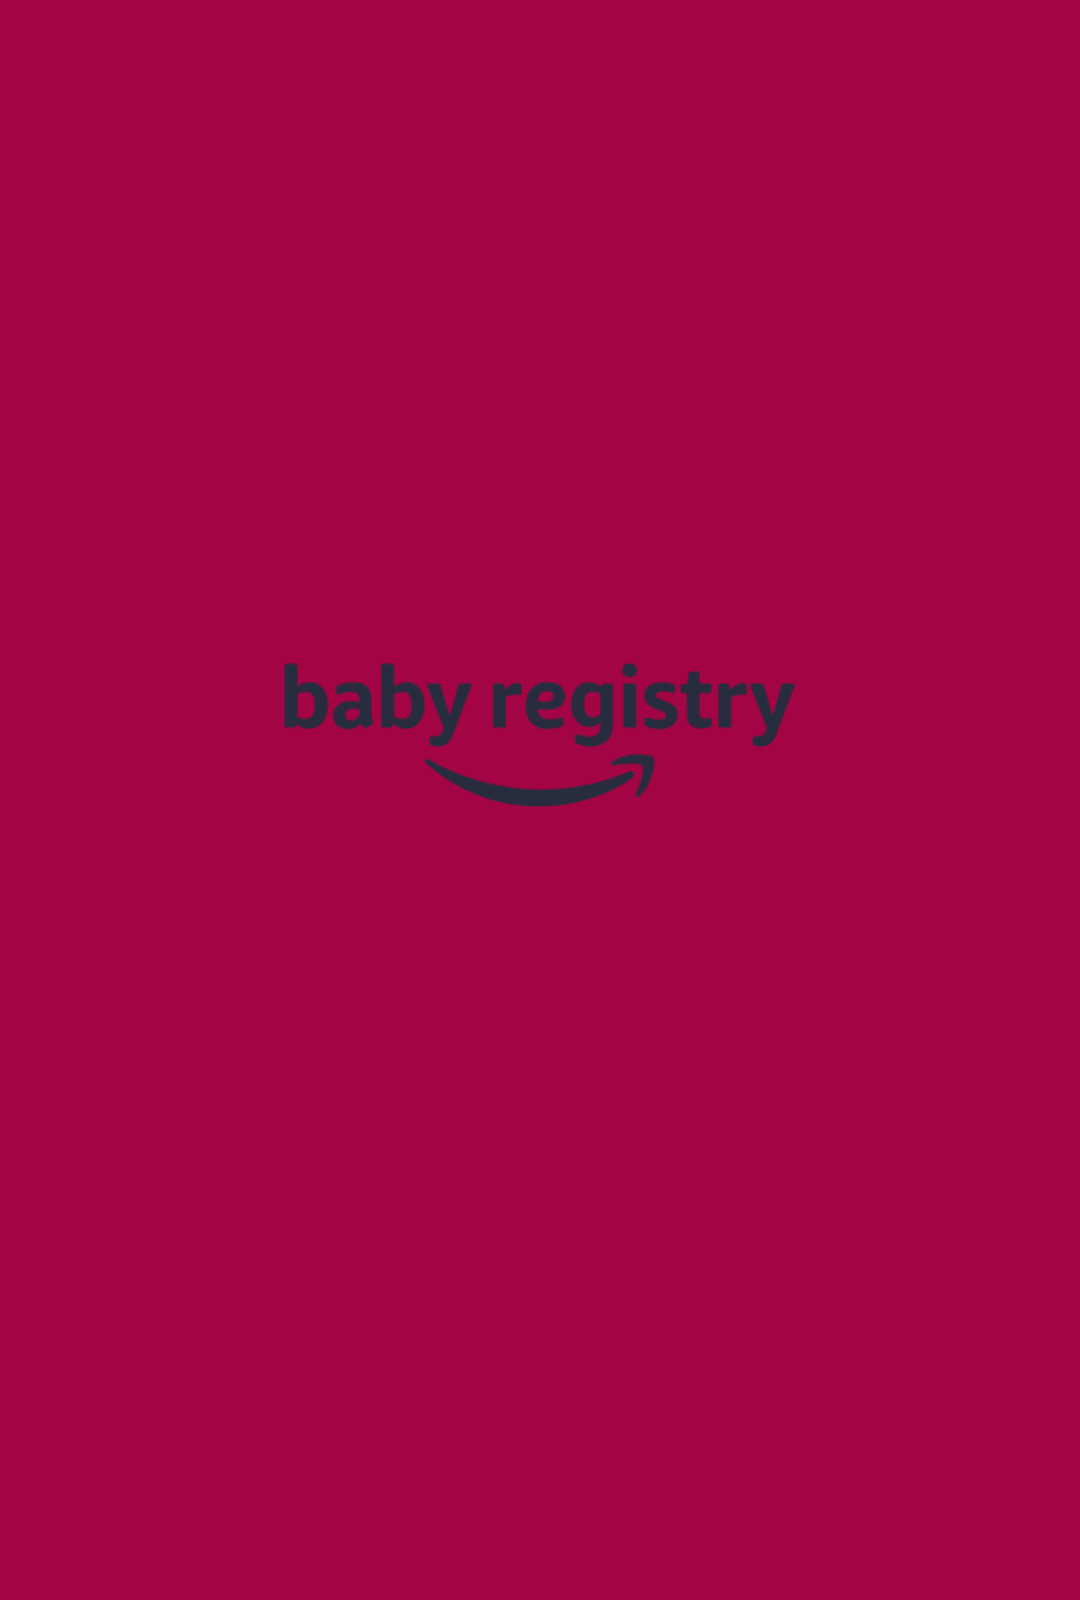 Amazon Baby Registry Information & Review Baby, Baby Registry MOTHER.COM MOTHER Mother | Pregnancy | Baby | Kids | Motherhood | Parenting